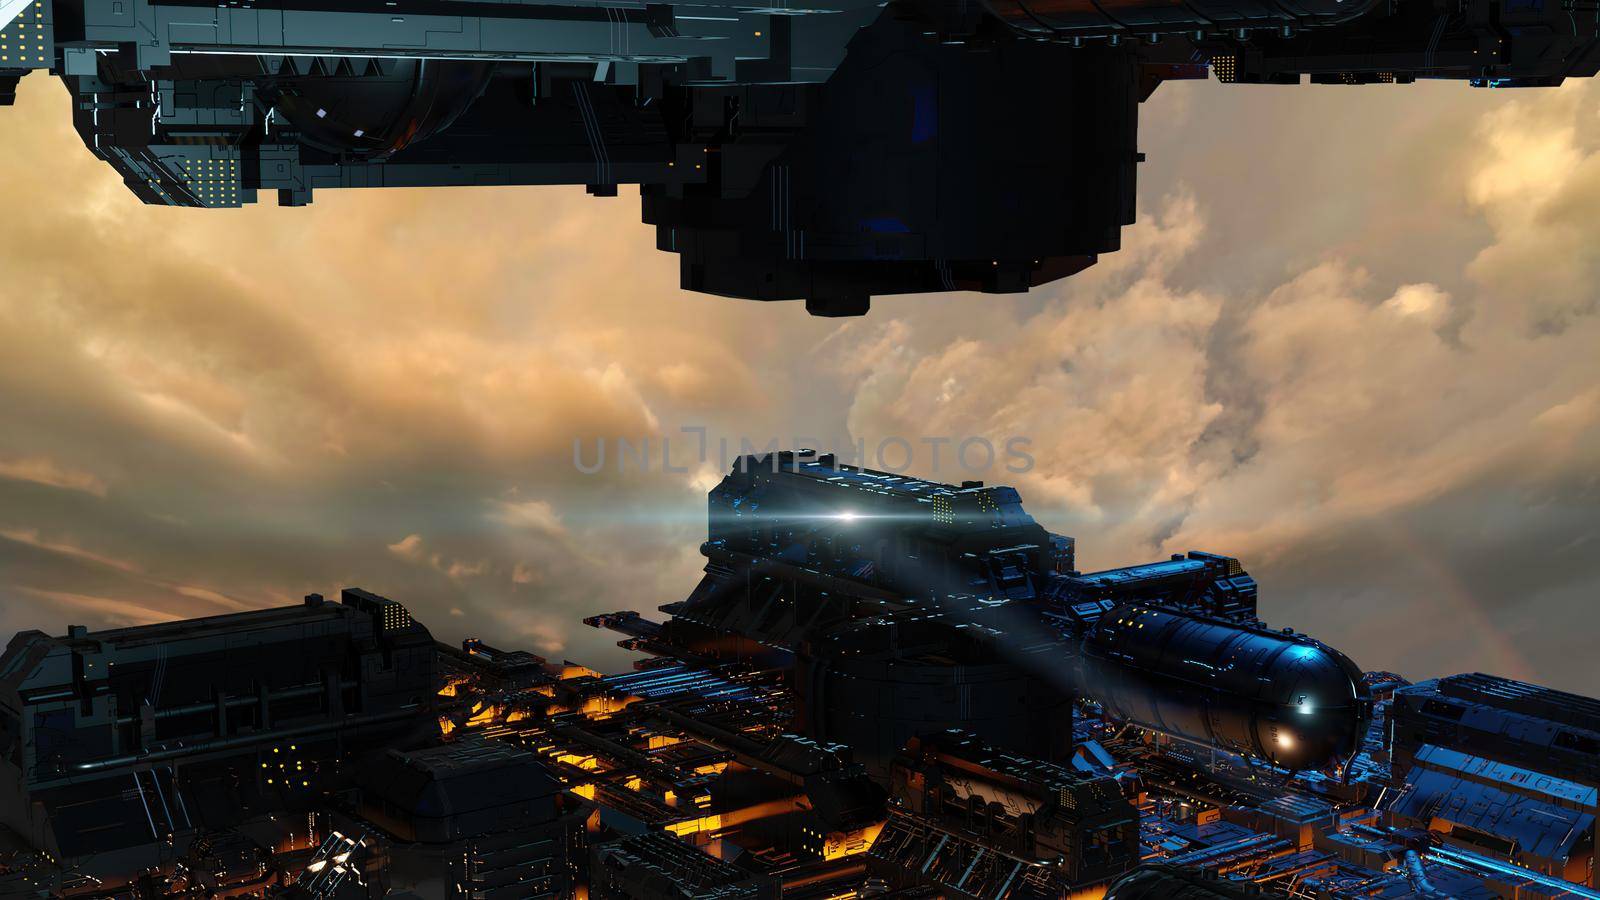 3d illustration - alien sci-fi city with optical flares by vitanovski